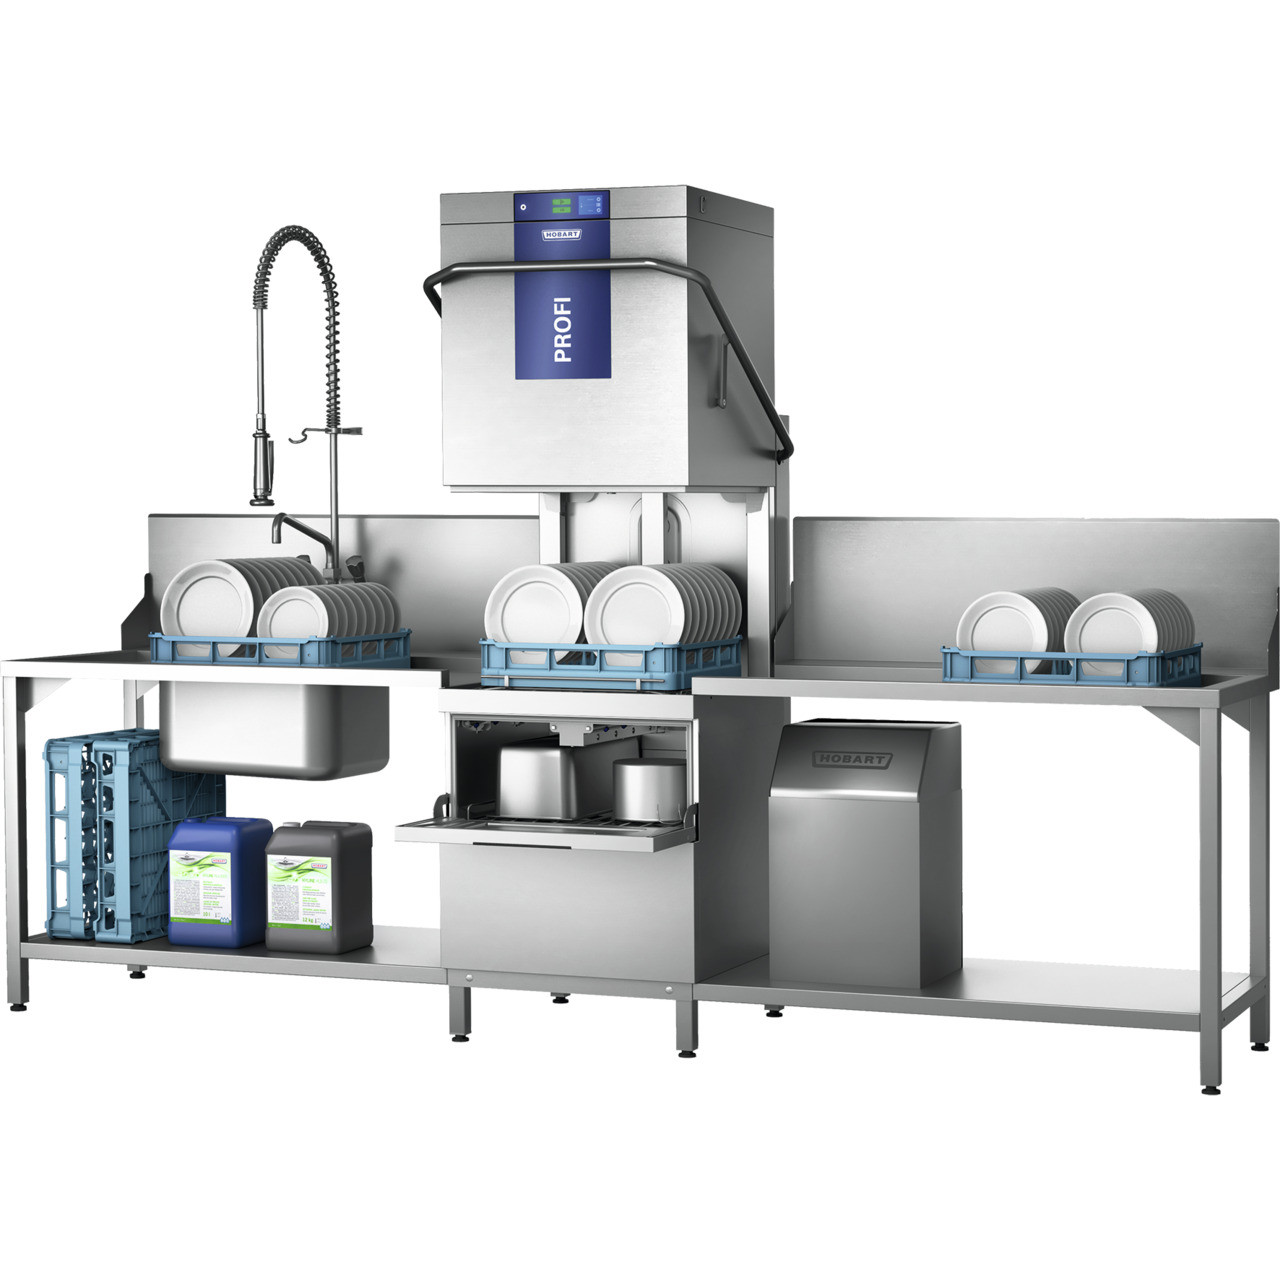 Durchschubspülmaschine PROFI TLWS-10A / mit integrierter Wasserenthärtung